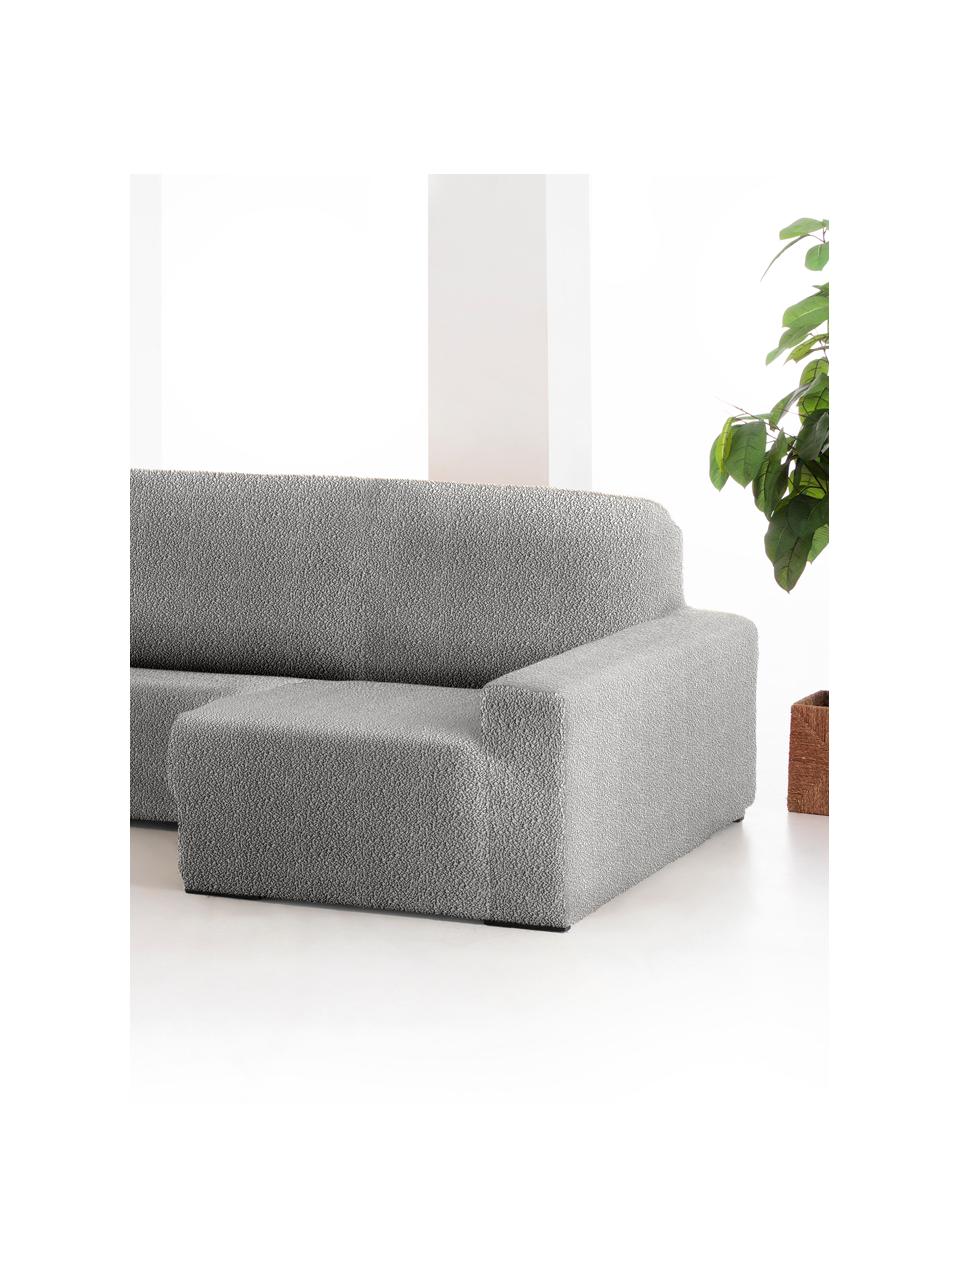 Funda de sofá rinconero Roc, 55% poliéster, 35% algodón, 10% elastómero, Gris, An 360 x F 180 cm, chaise longue derecha